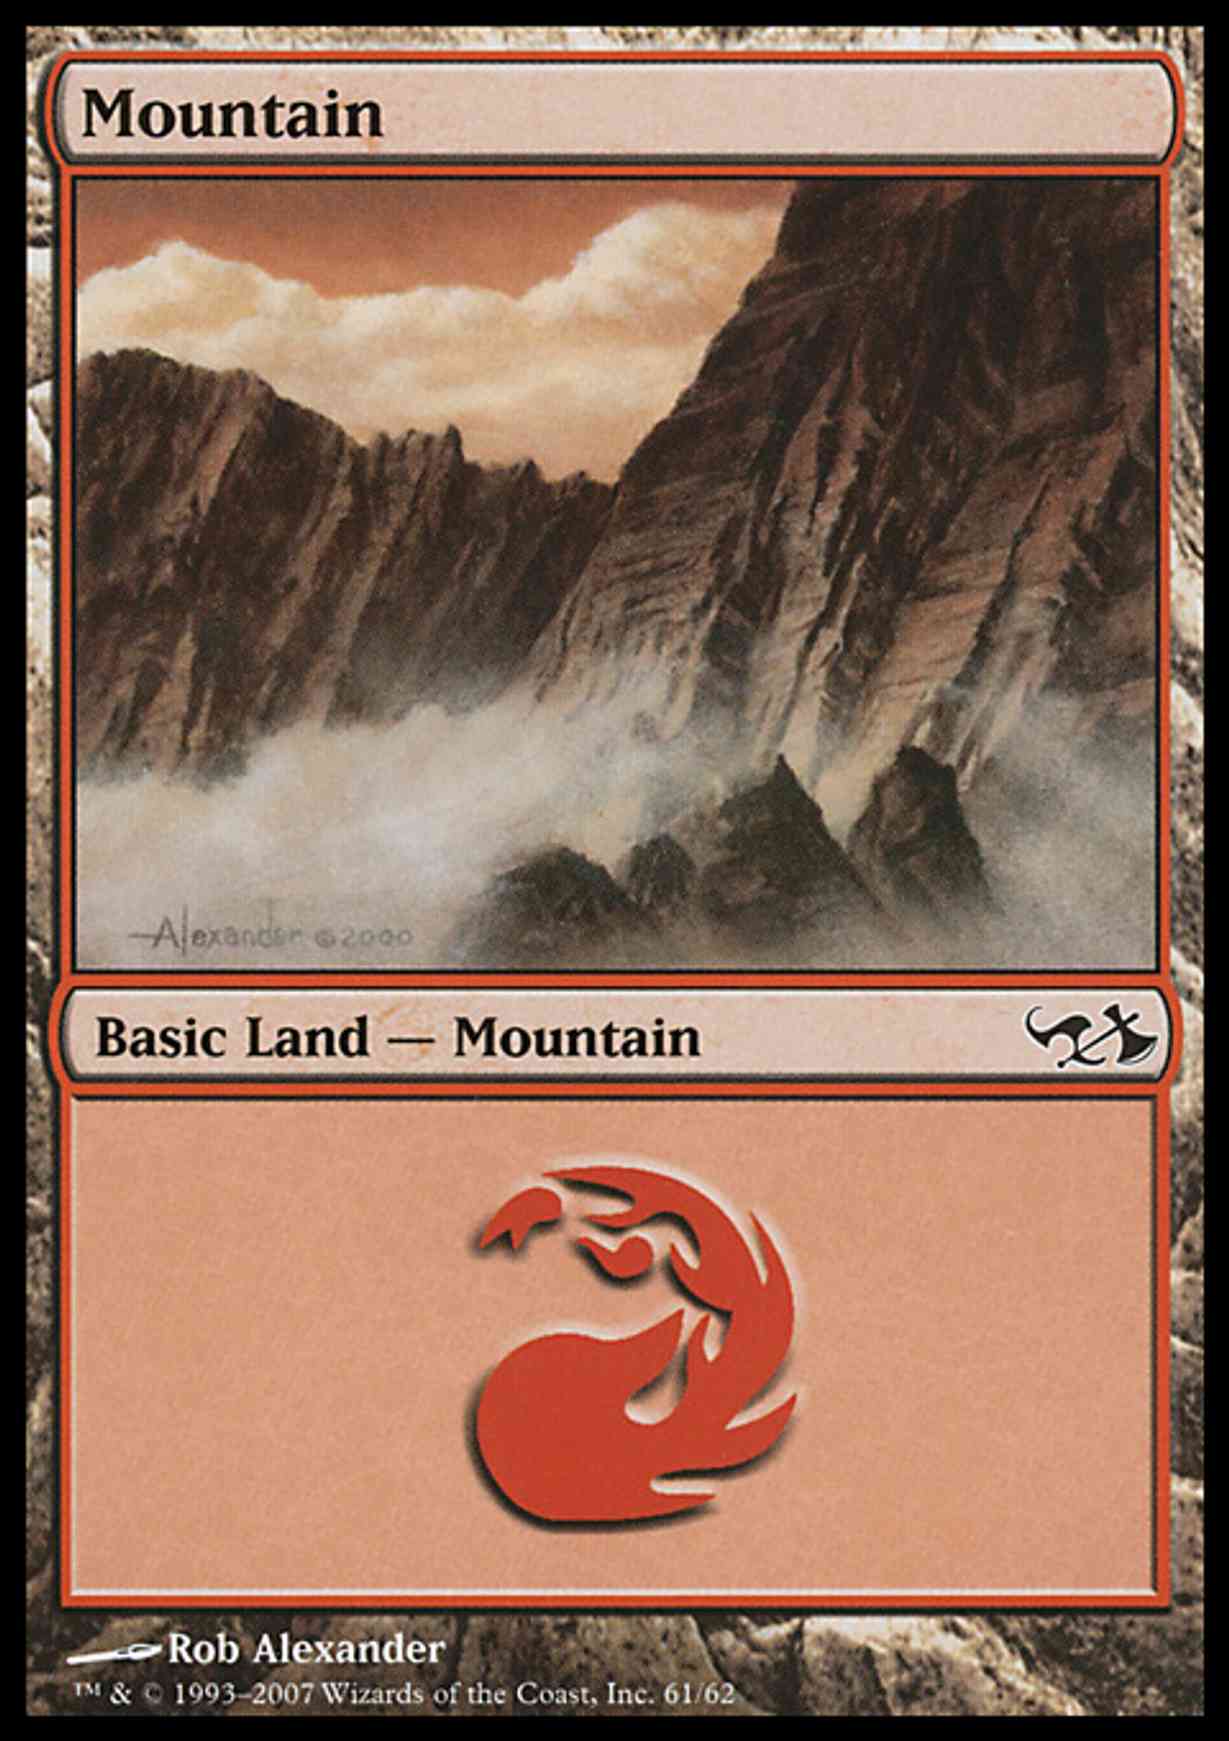 Mountain (61)  magic card front